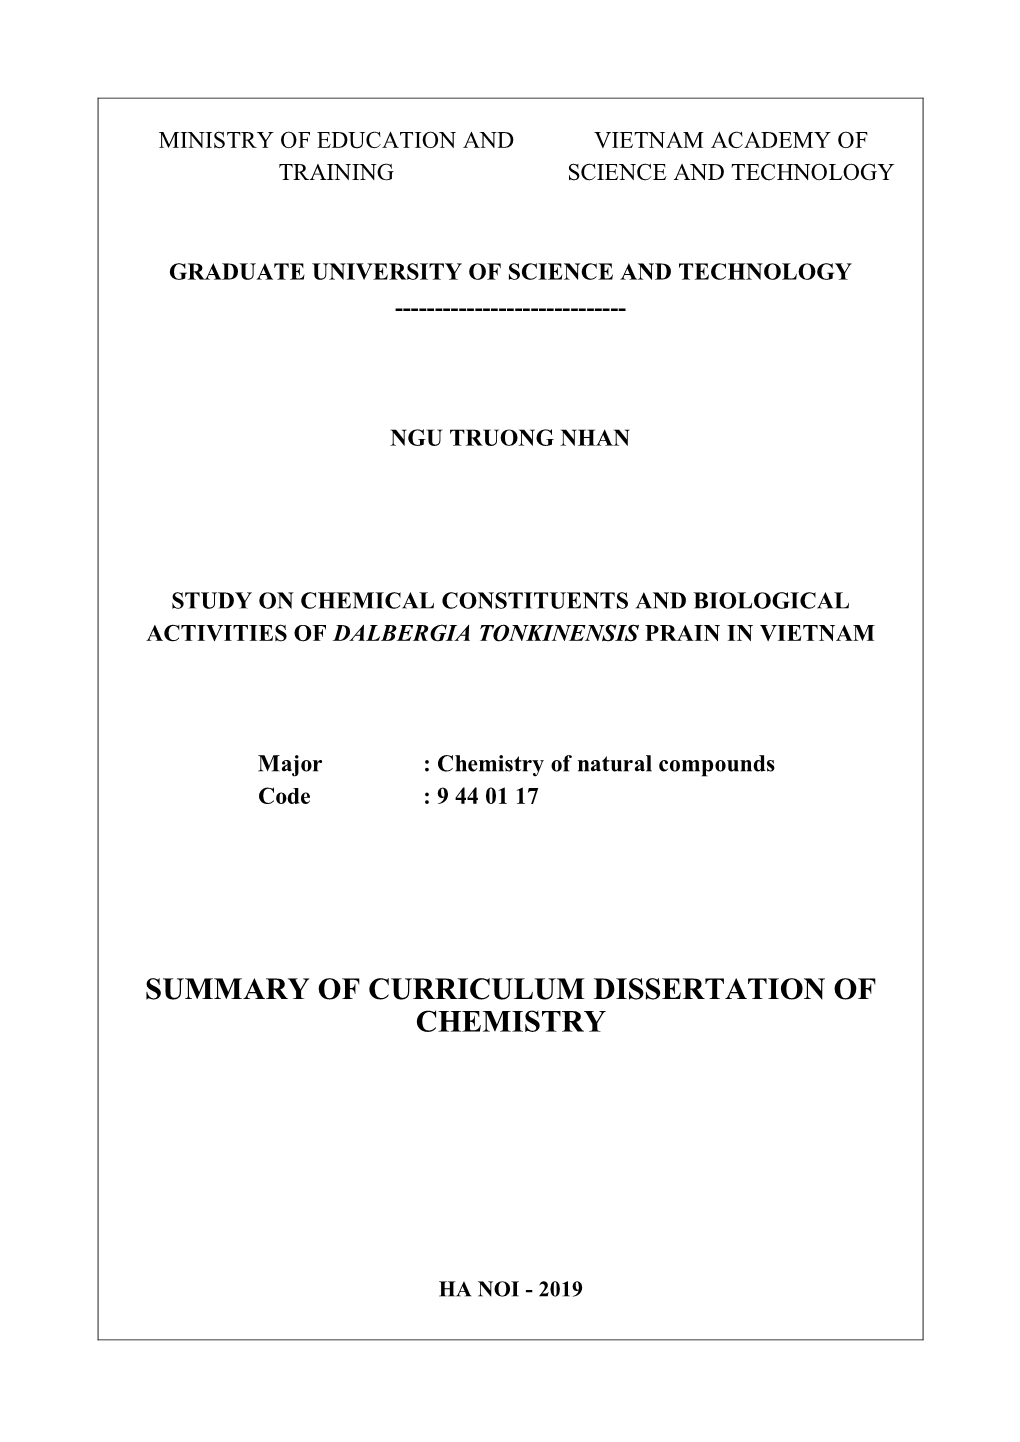 Summary of Curriculum Dissertation of Chemistry